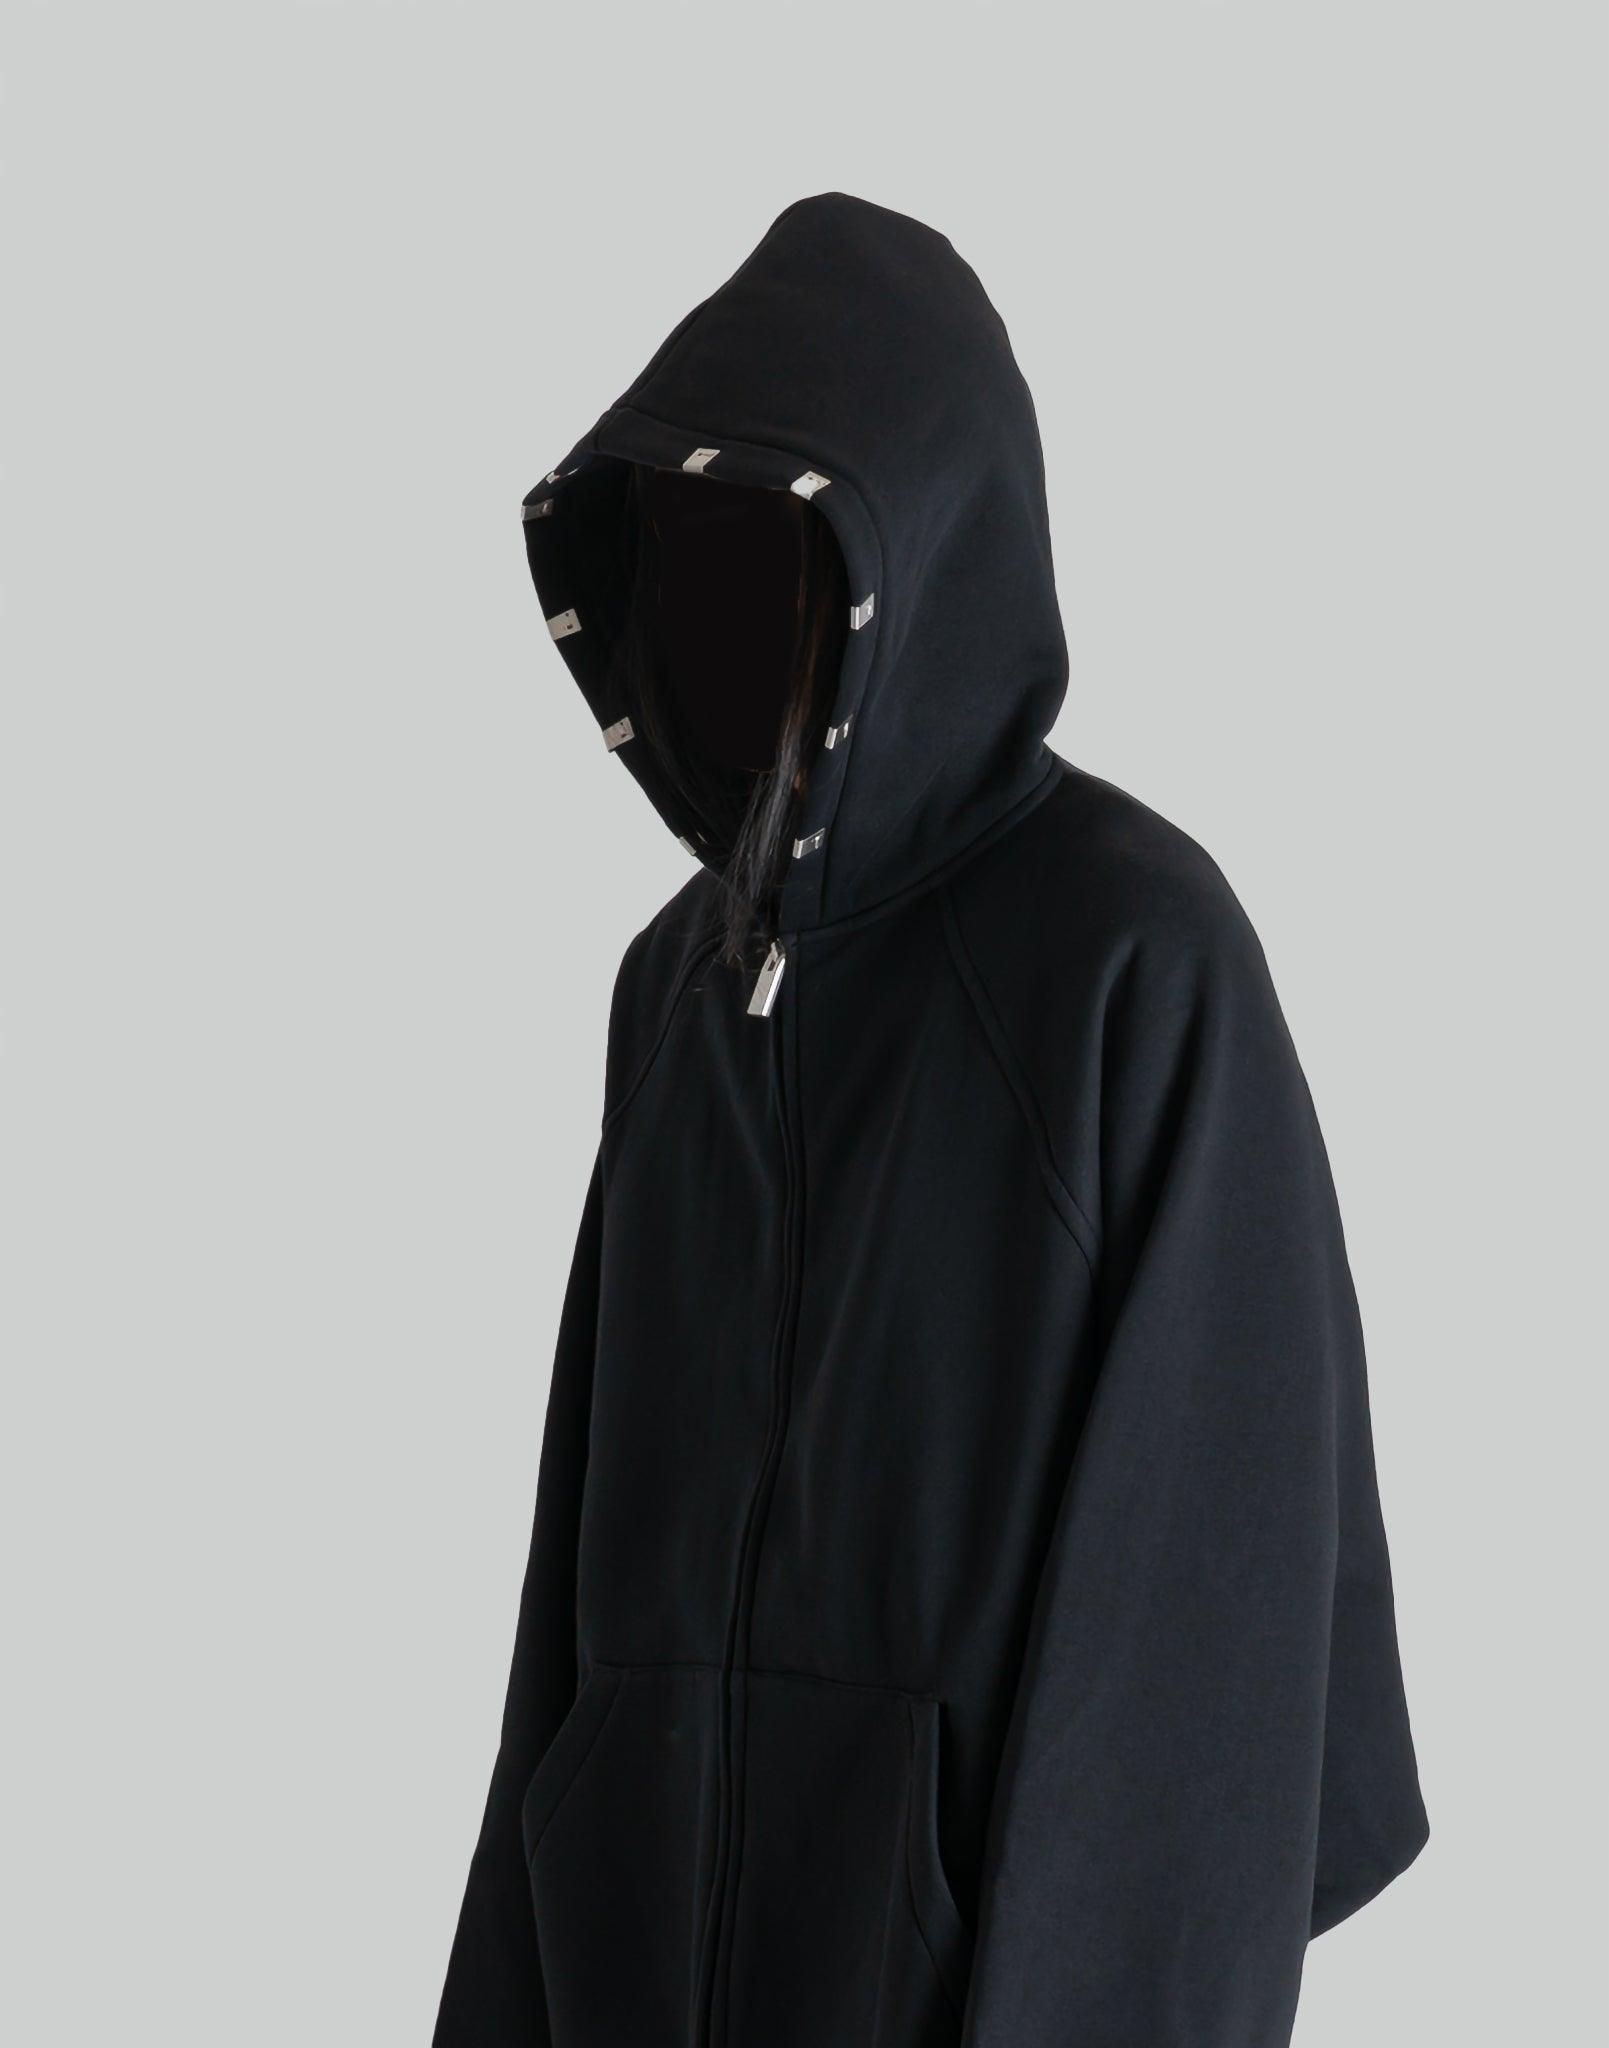 袖丈95cm1017 Alyx 9sm Lightercap zip hoodie Mサイズ